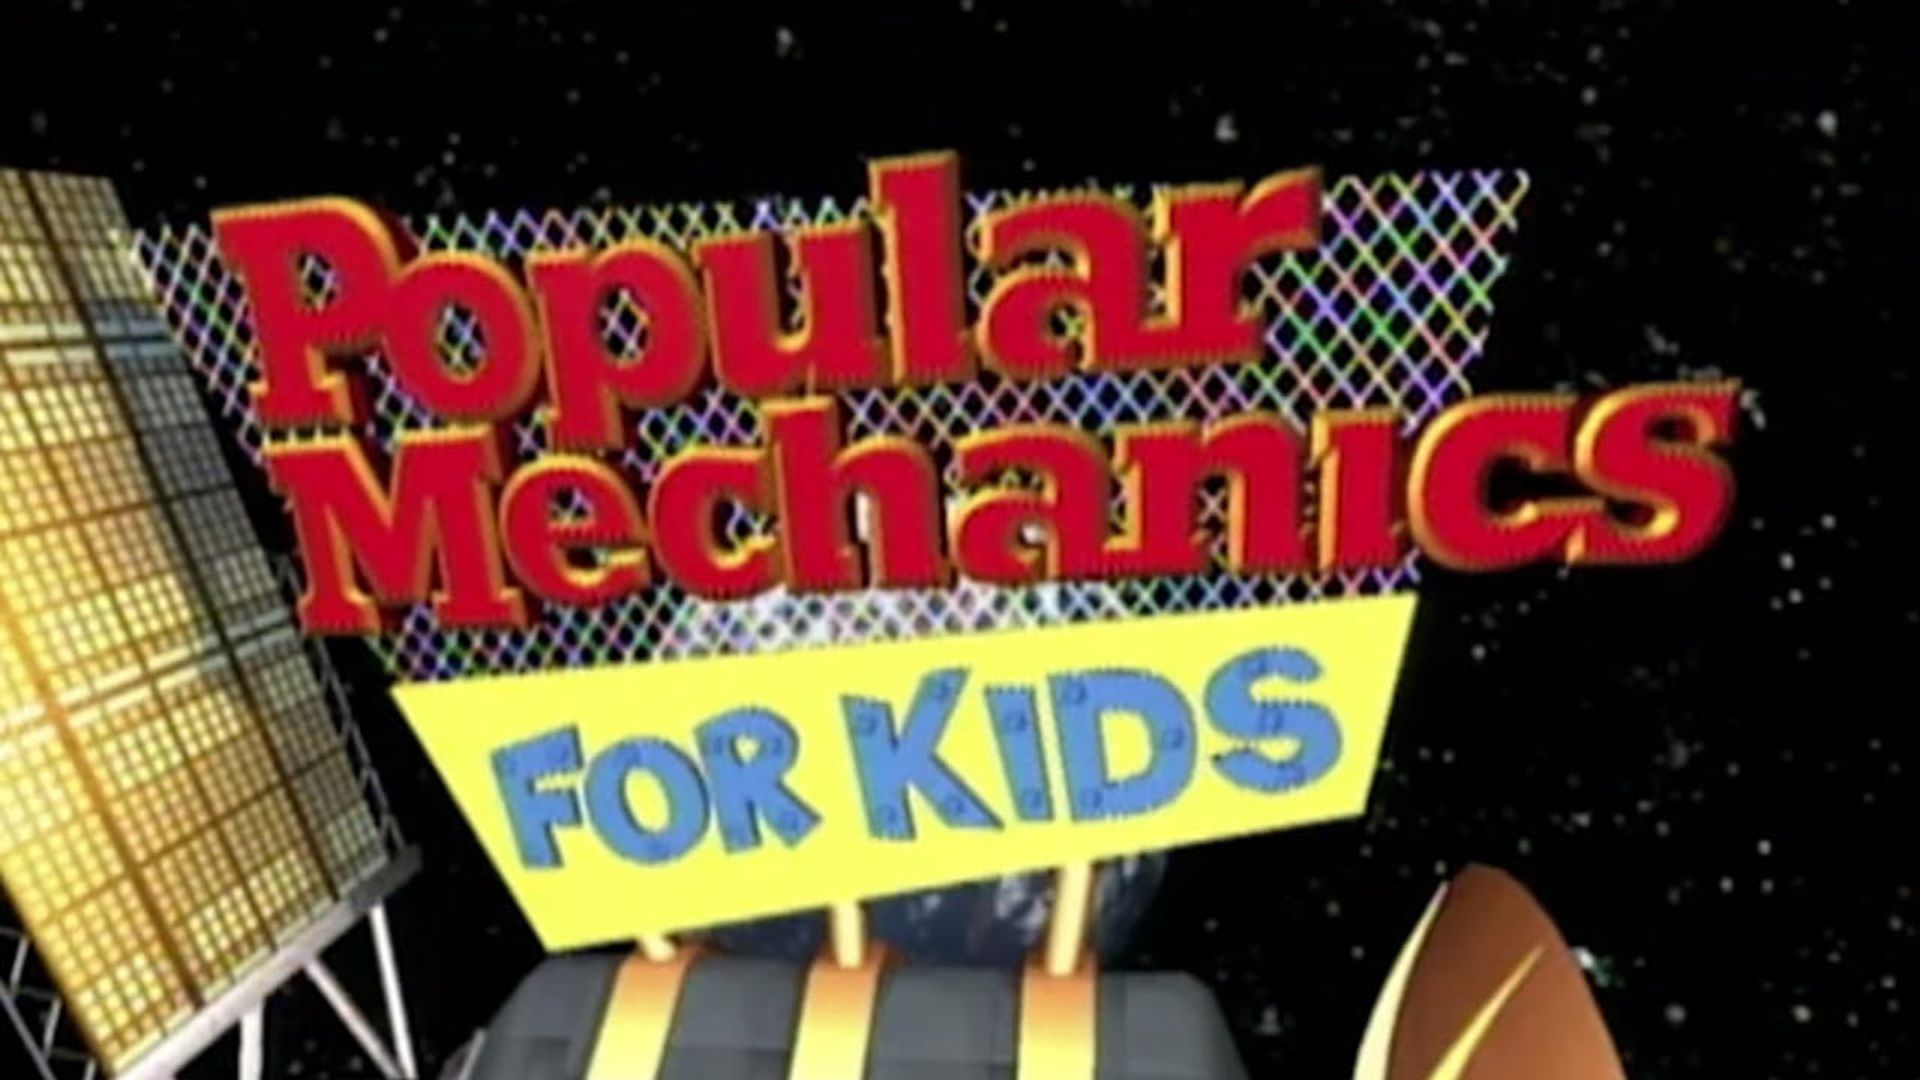 Popular Mechanics for Kids background